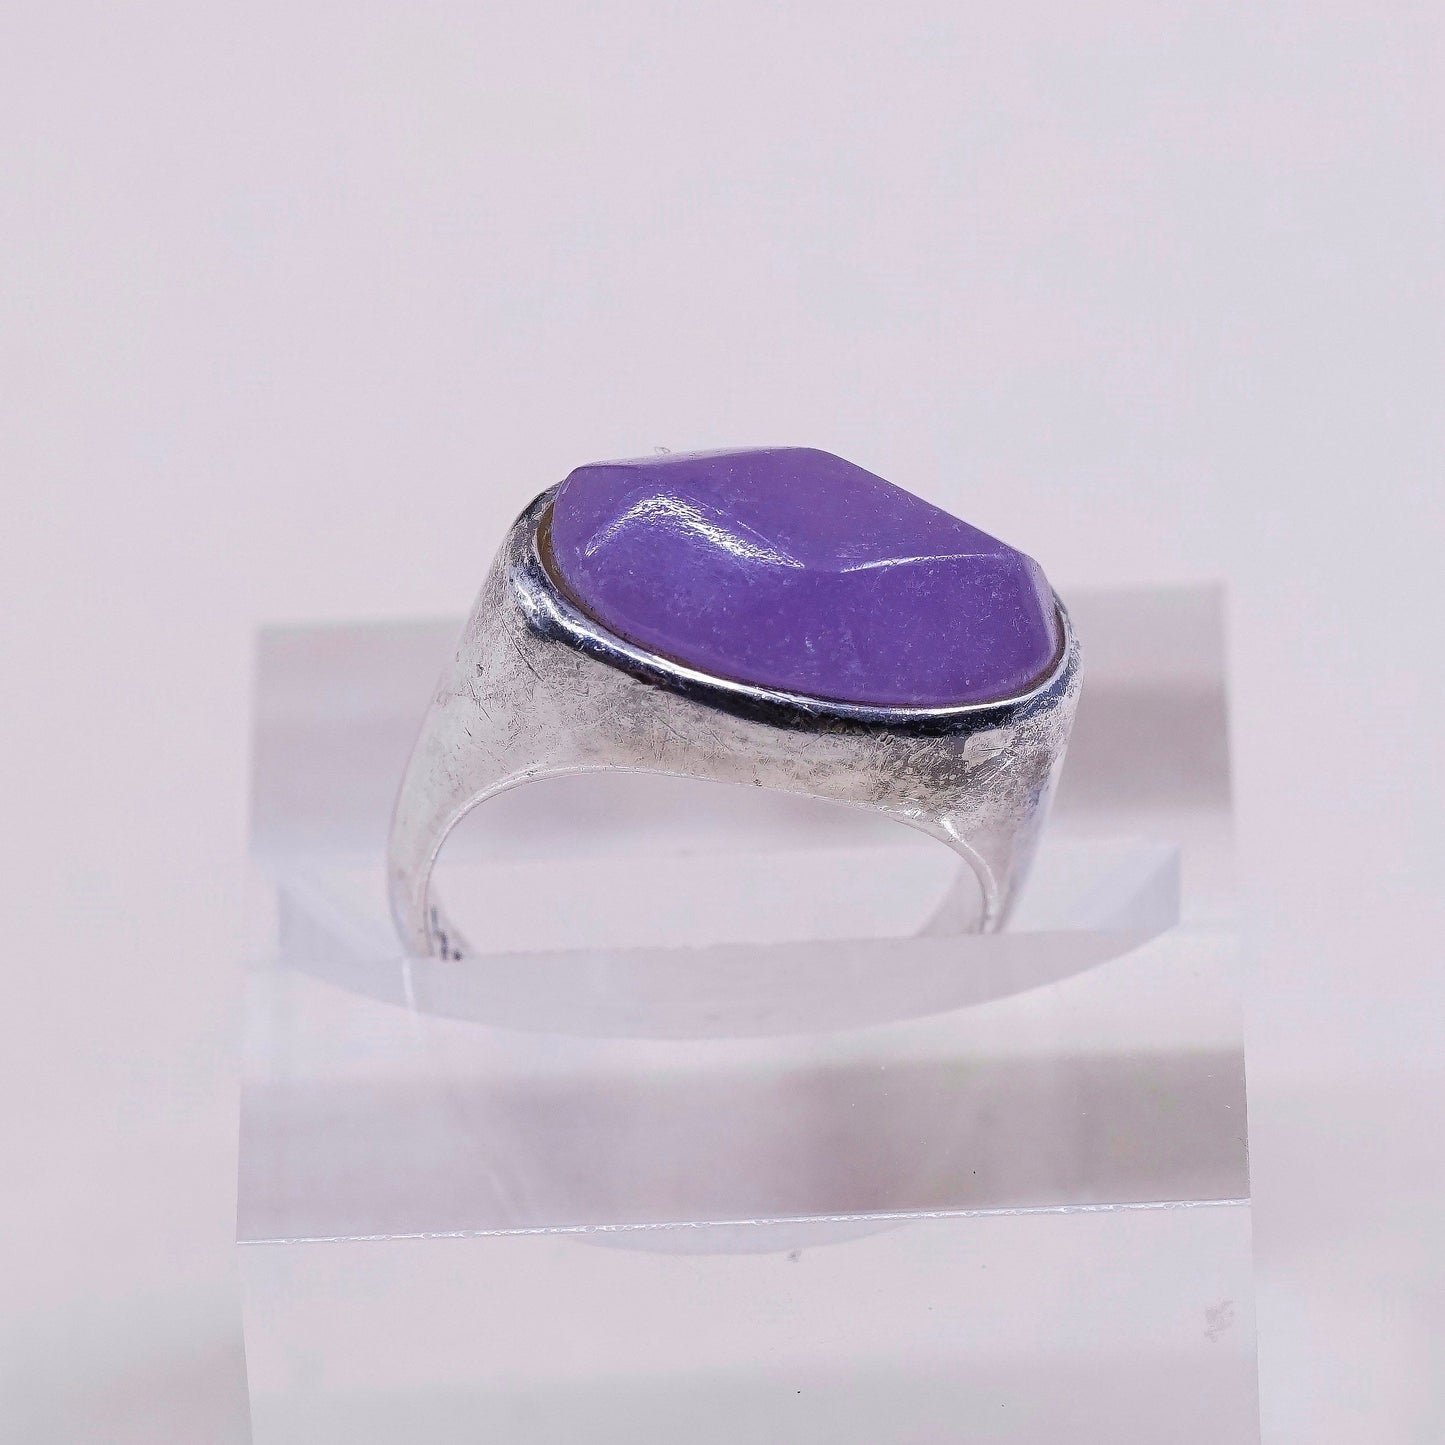 sz 6.75, vtg PB sterling silver handmade ring, with purple jade, stamped 925 PB